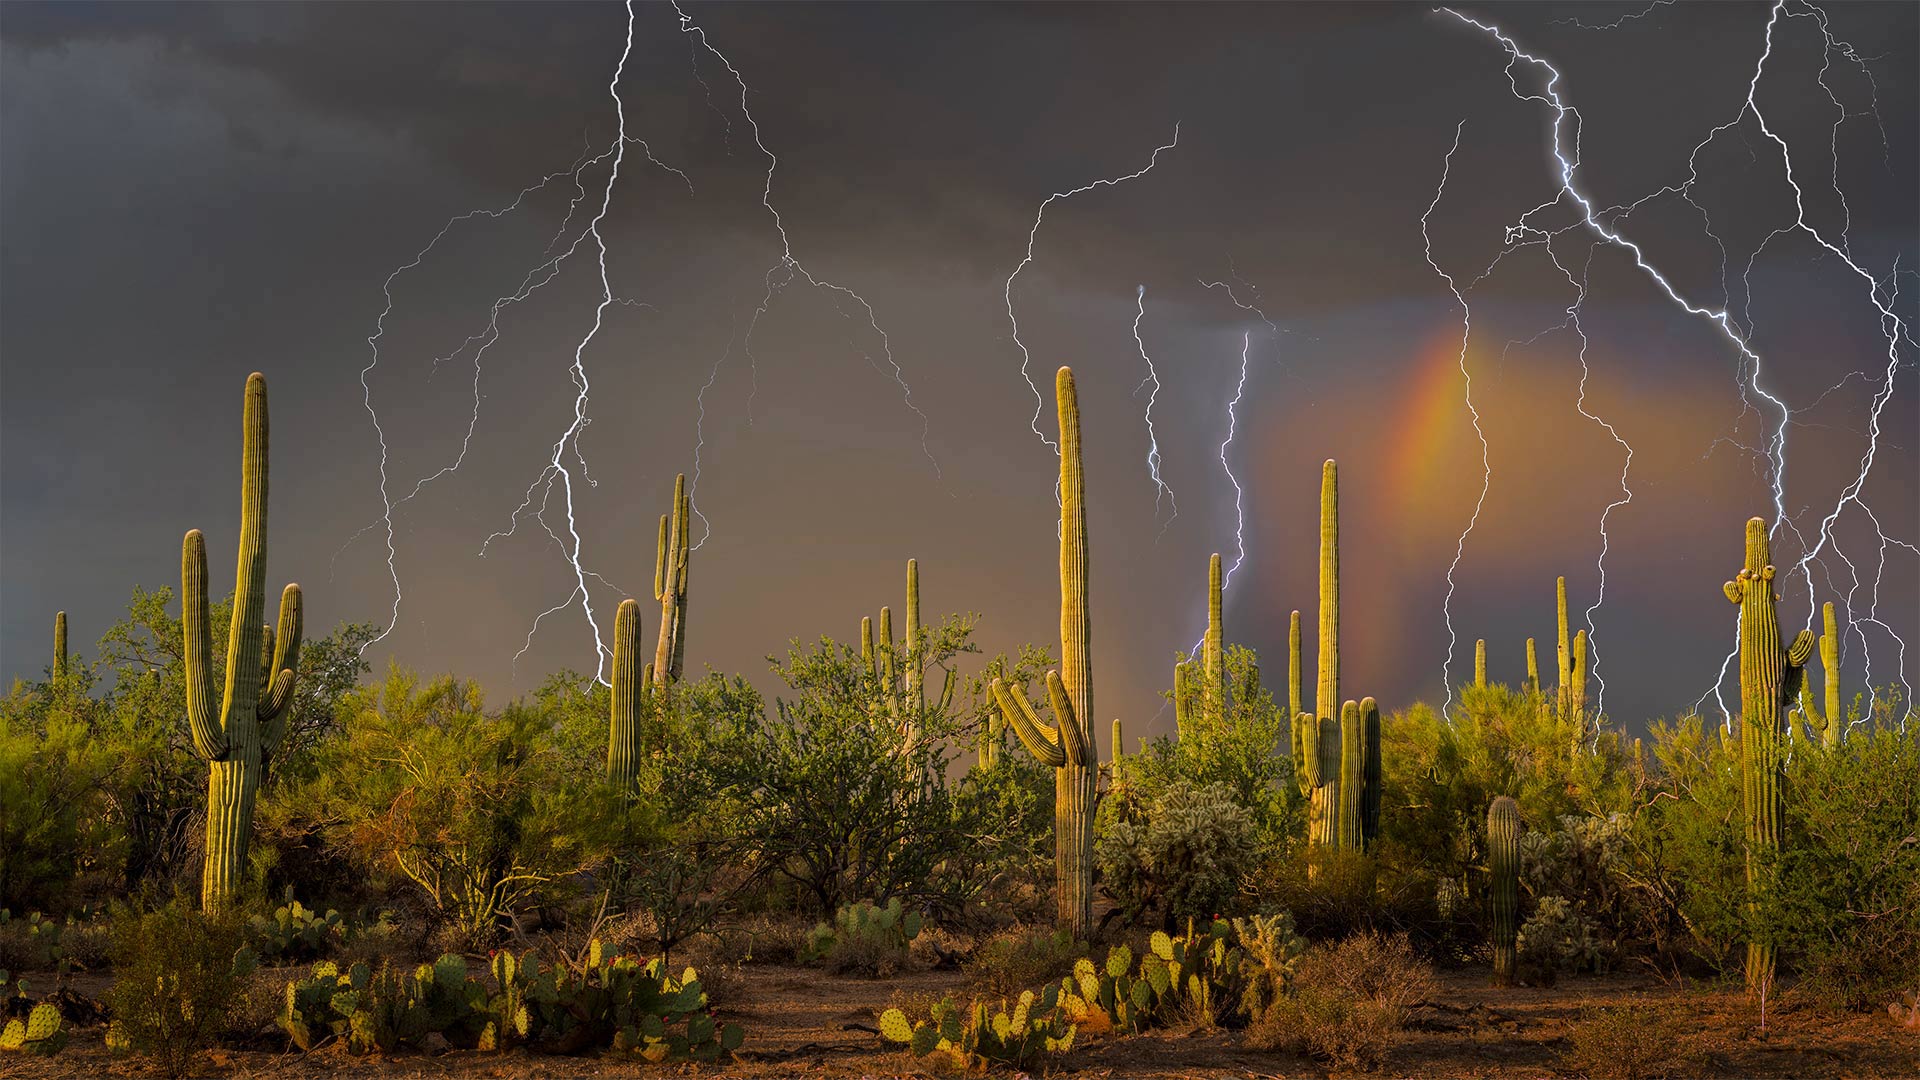 Lightning storm in the Tortolita Mountain foothills, north of Tucson, Arizona, in the Sonoran Desert - Jack Dykinga